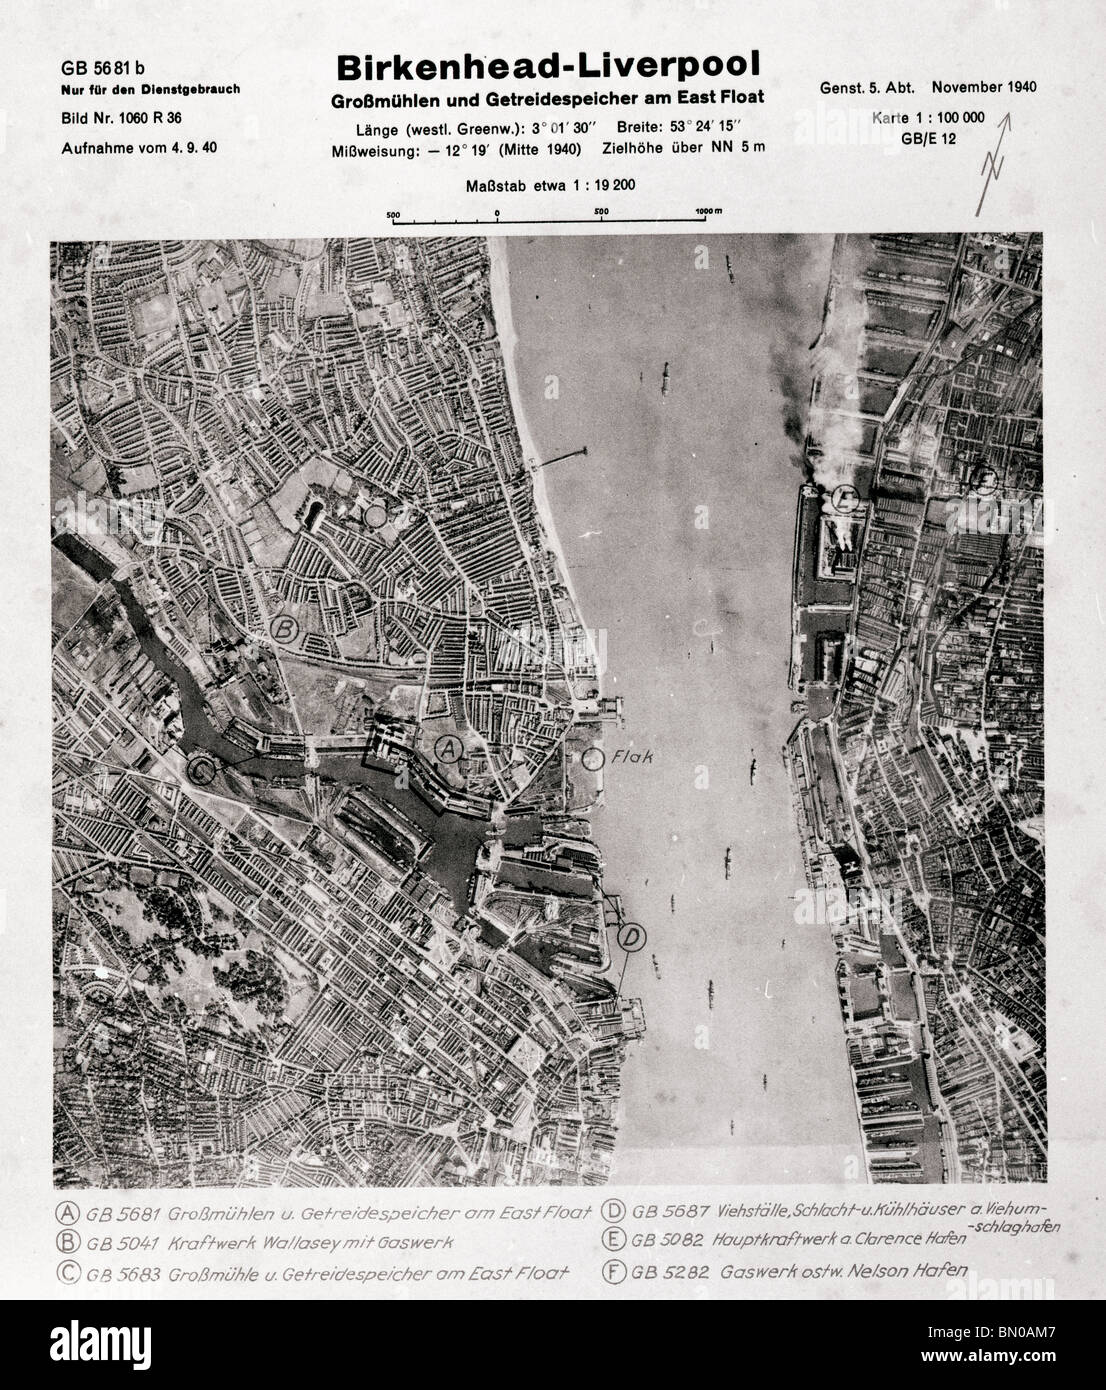 Birkenhead - Liverpool 1940 Docks Ship Canal Luftwaffe immagine aerea Foto Stock